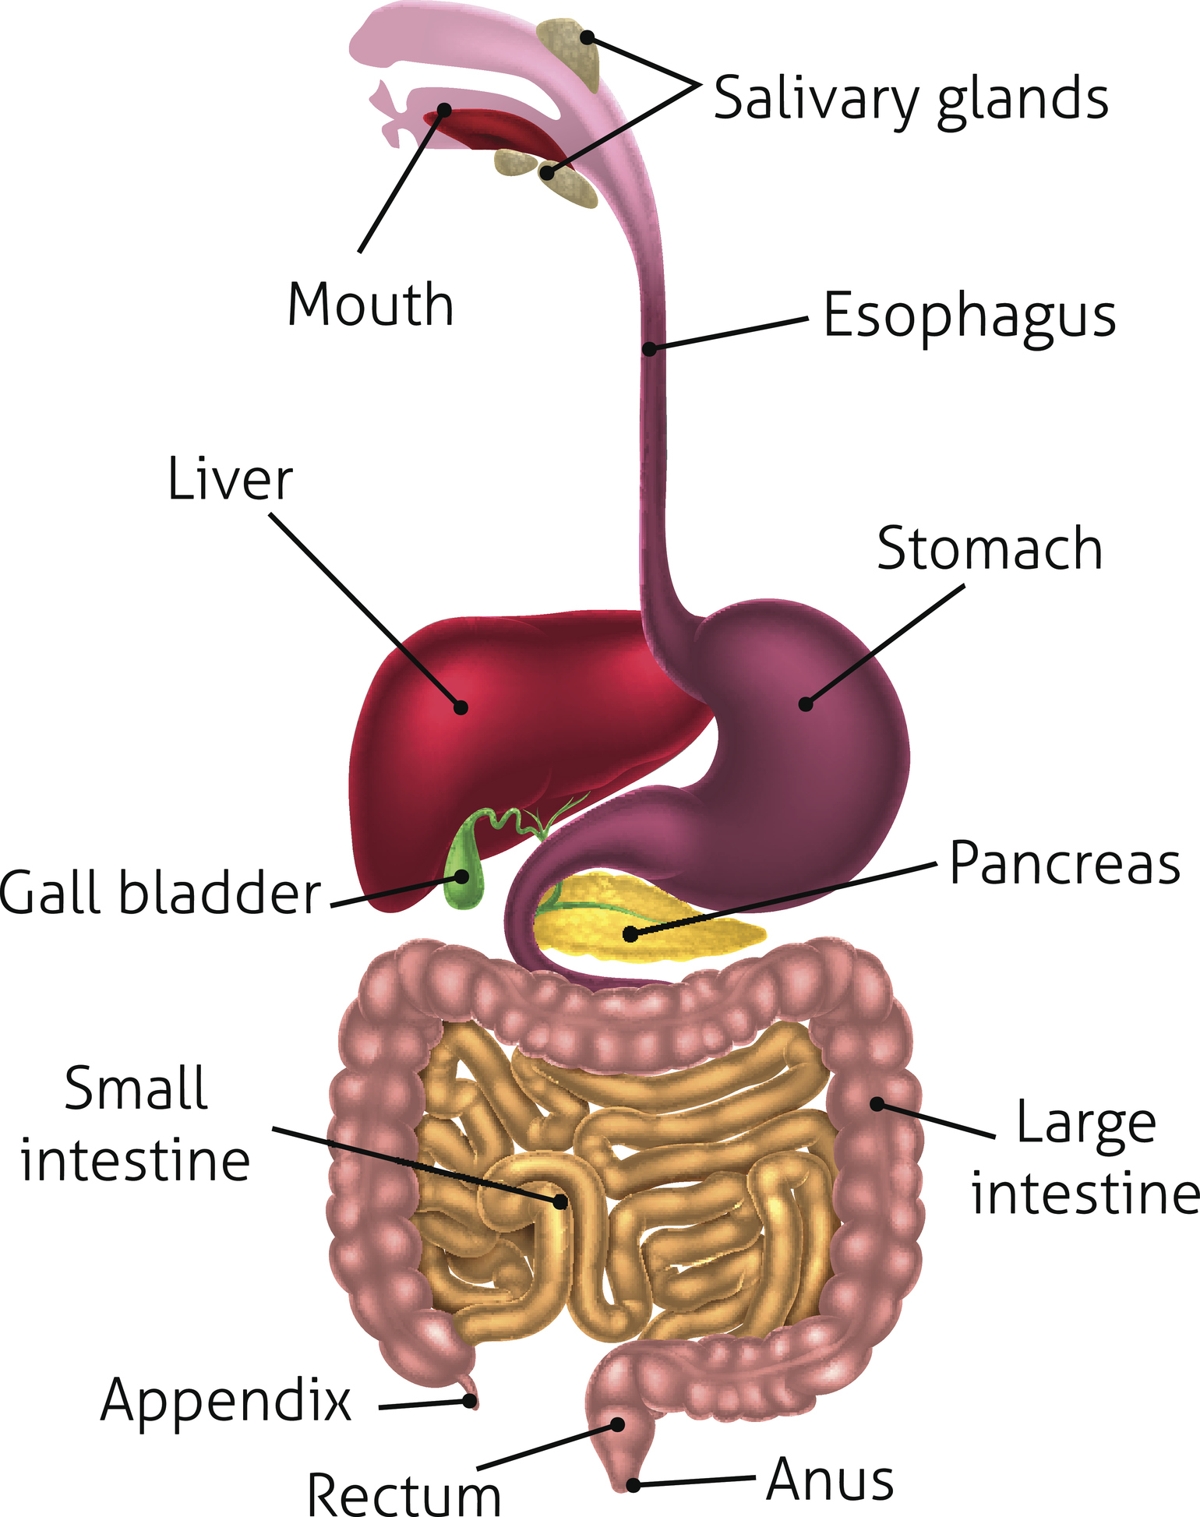 Le Systeme Digestif 4006771 Vr2422uu Digestive System 3b Scientific Images